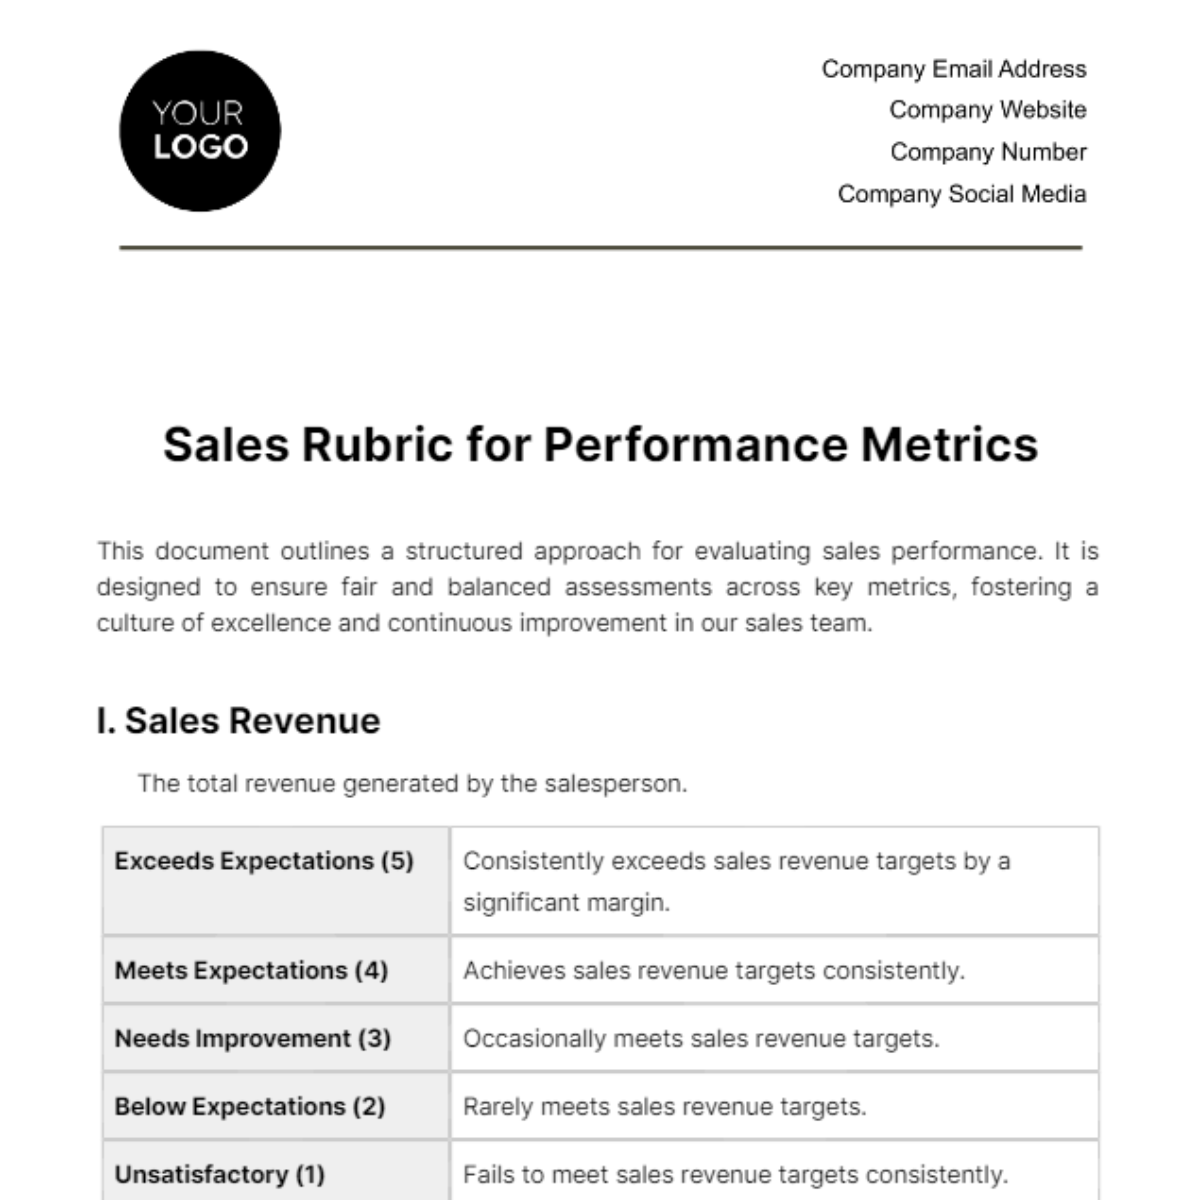 Free Sales Rubric for Performance Metrics Template